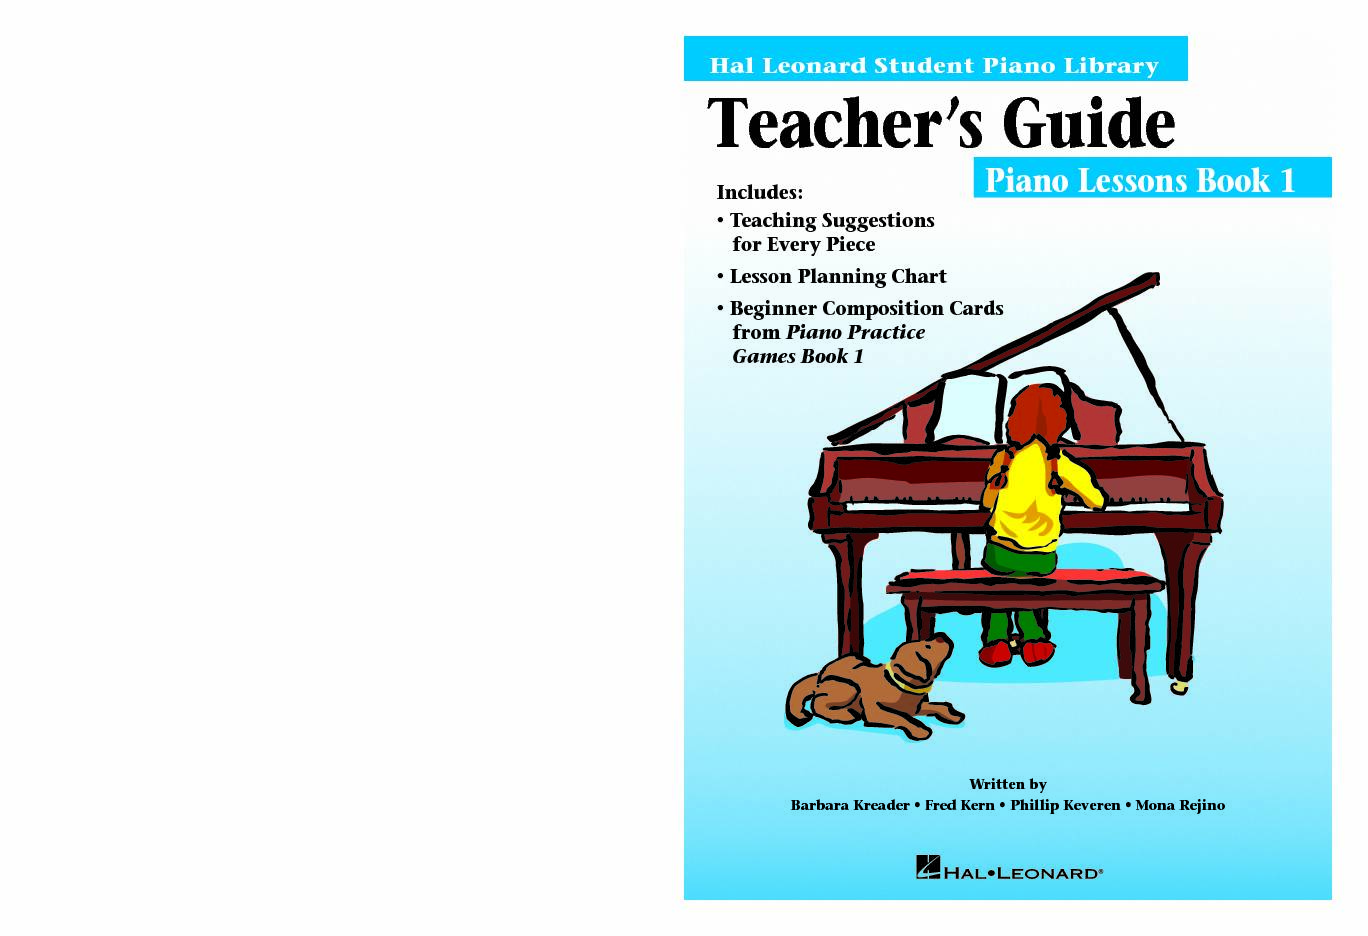 [PDF] Piano Lessons Book 1 - Hal Leonard